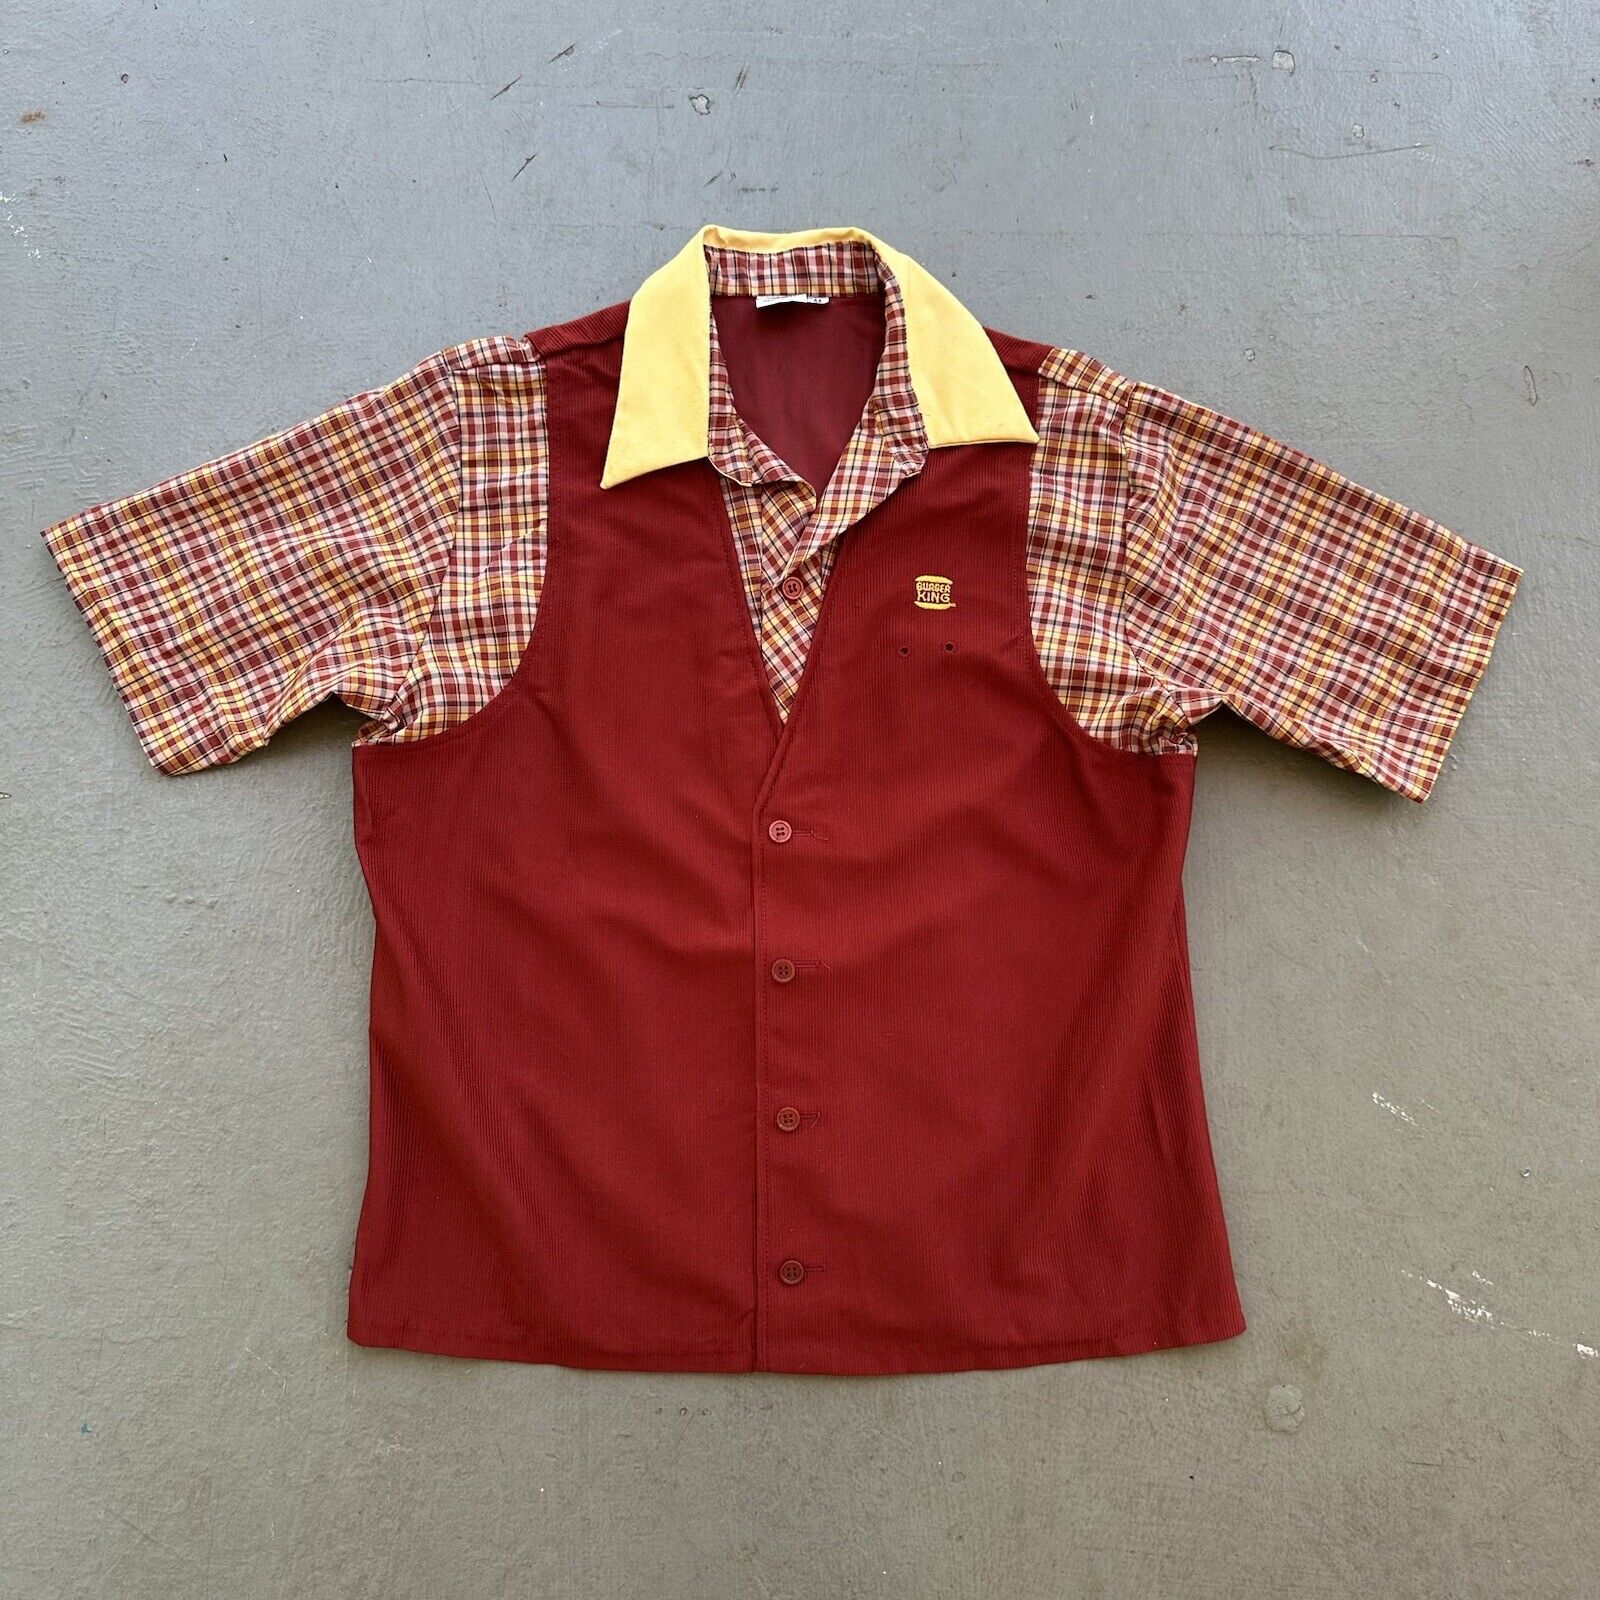 Vintage 70s 80s Burger King Employee Uniform Shirt Corduroy/ Plaid - Mens M